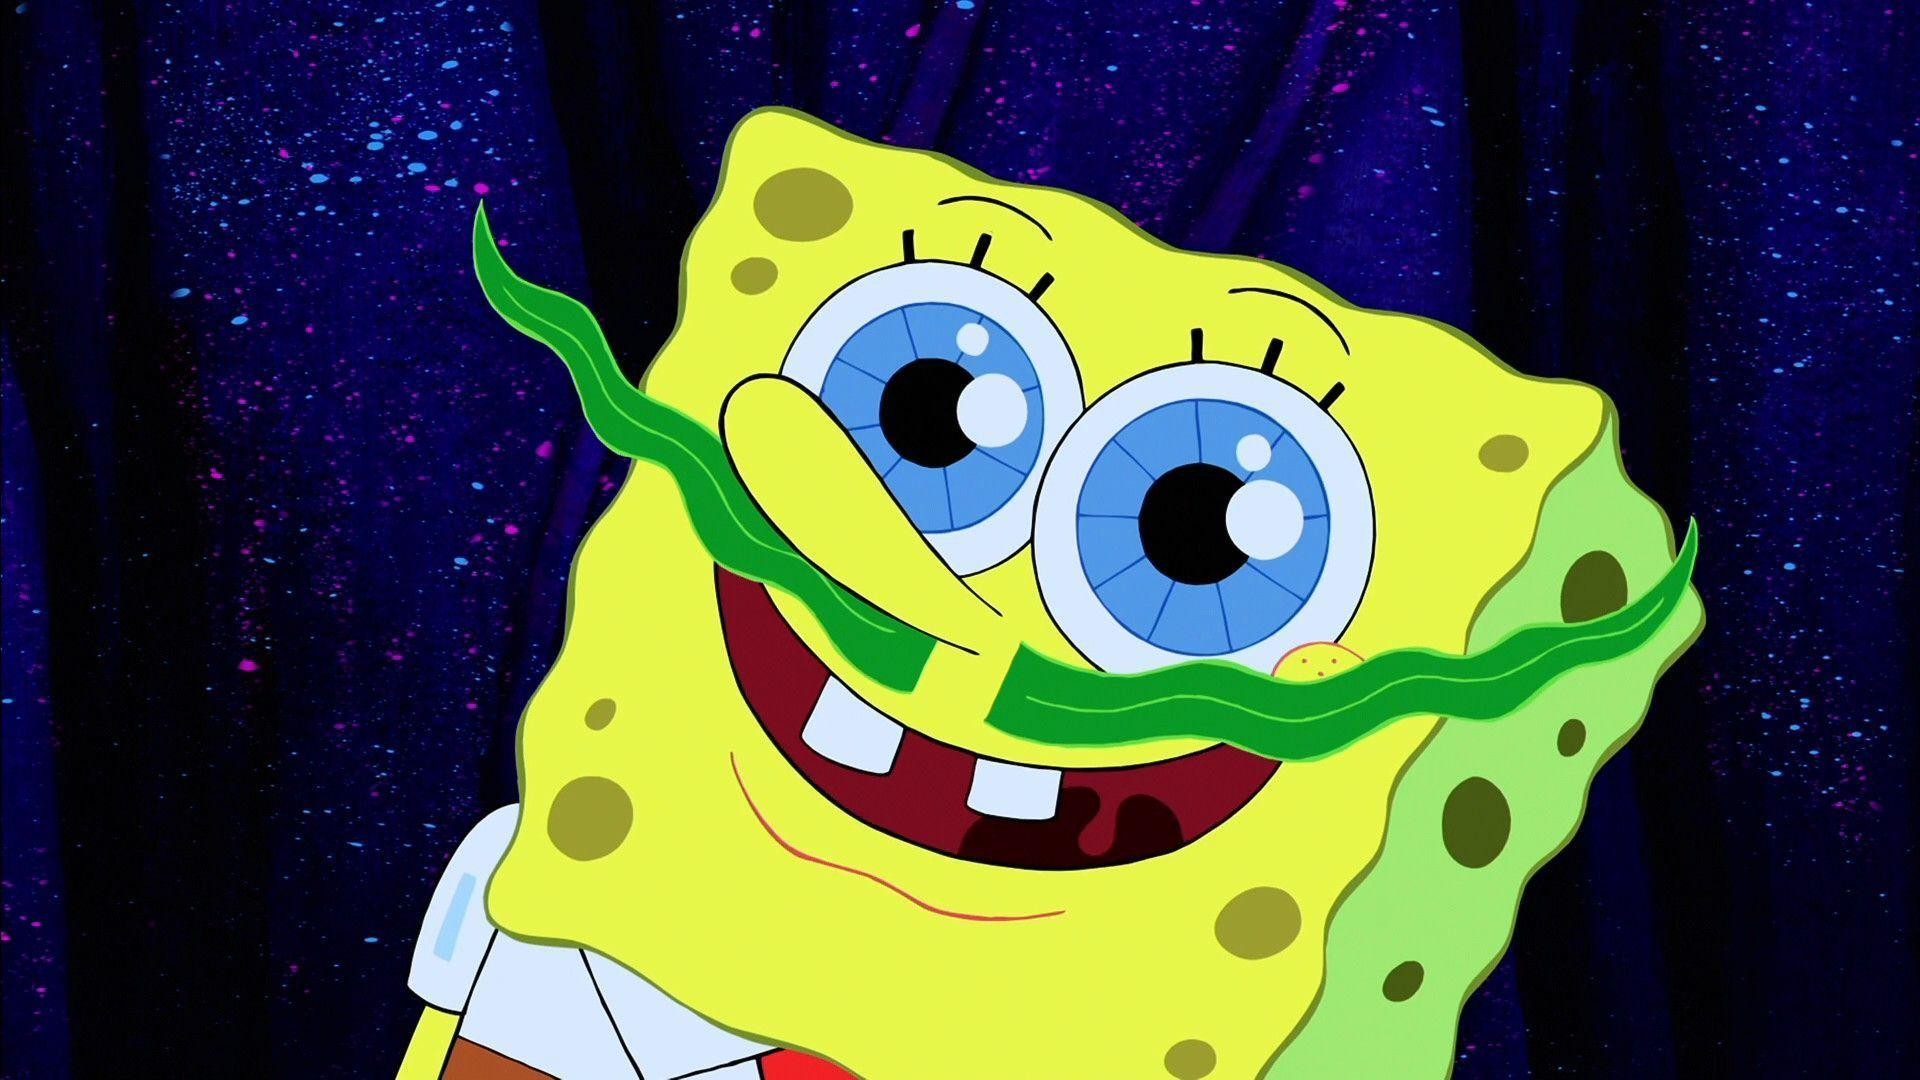 1920x1080 45 best images about Spongebob on Pinterest | Spongebob episodes .